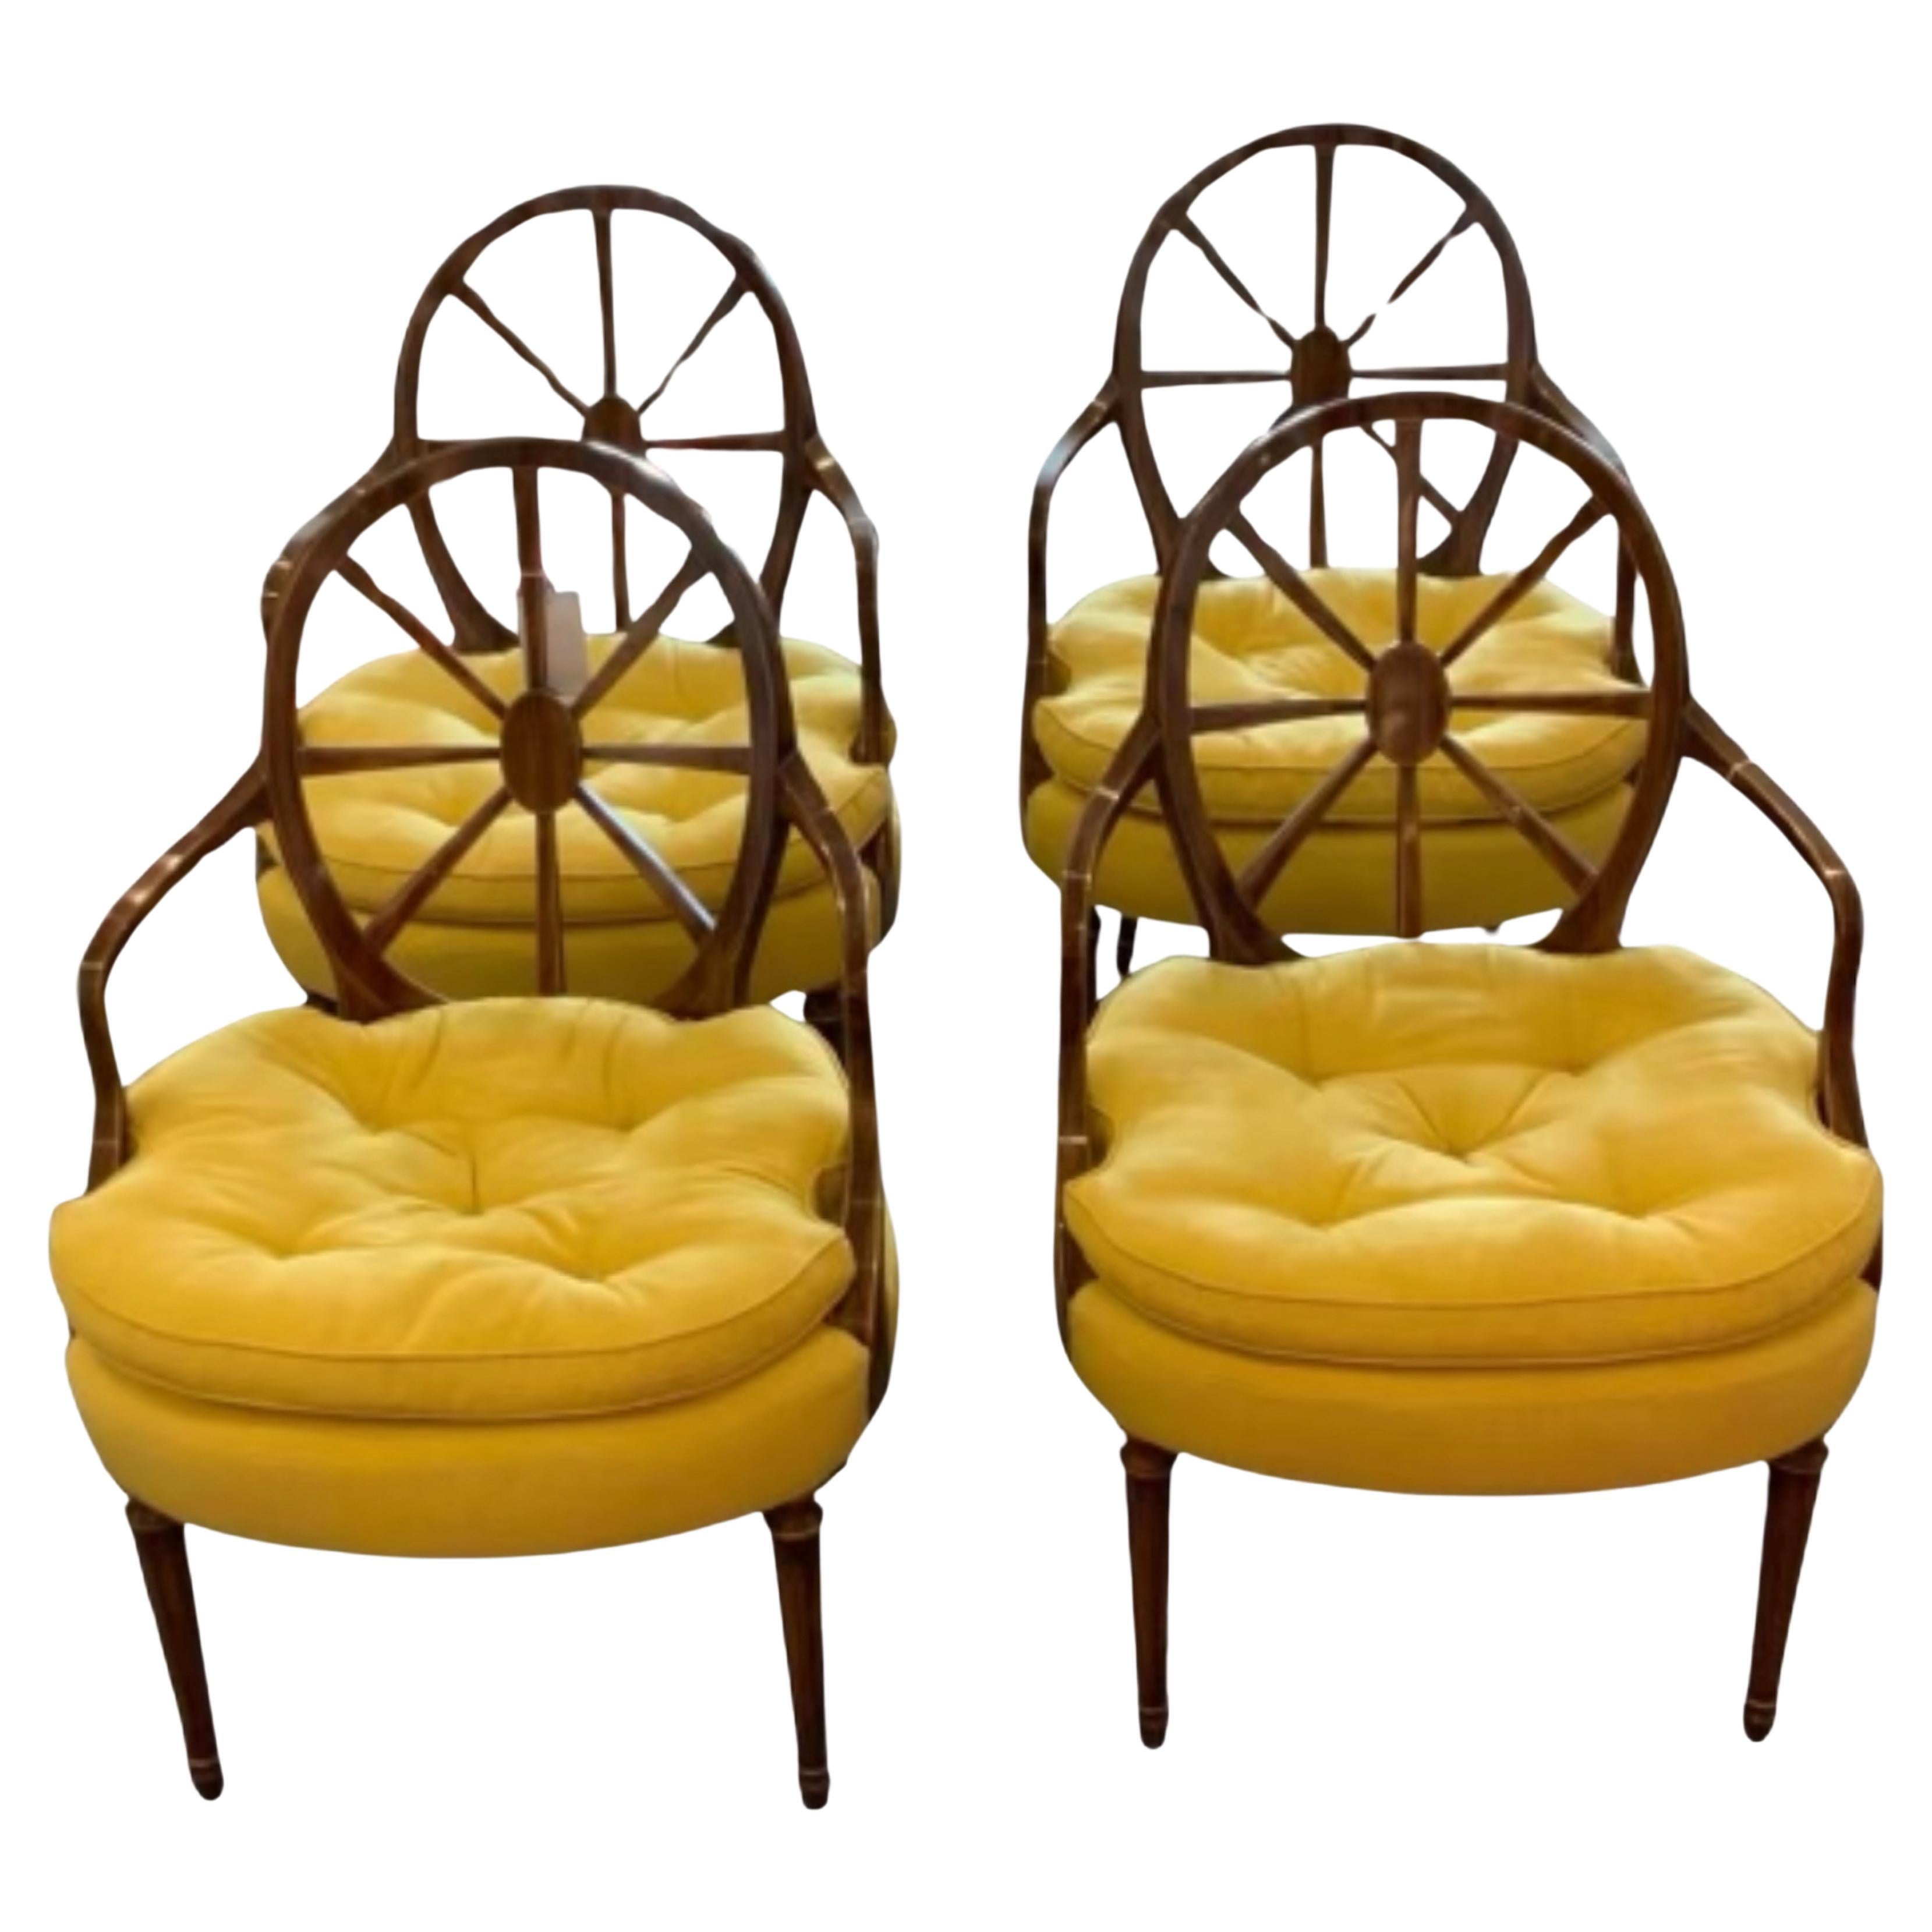 Billy Baldwin zugeschriebene Sessel aus Rosenholz im Regency-Stil, verkauft in Paaren 